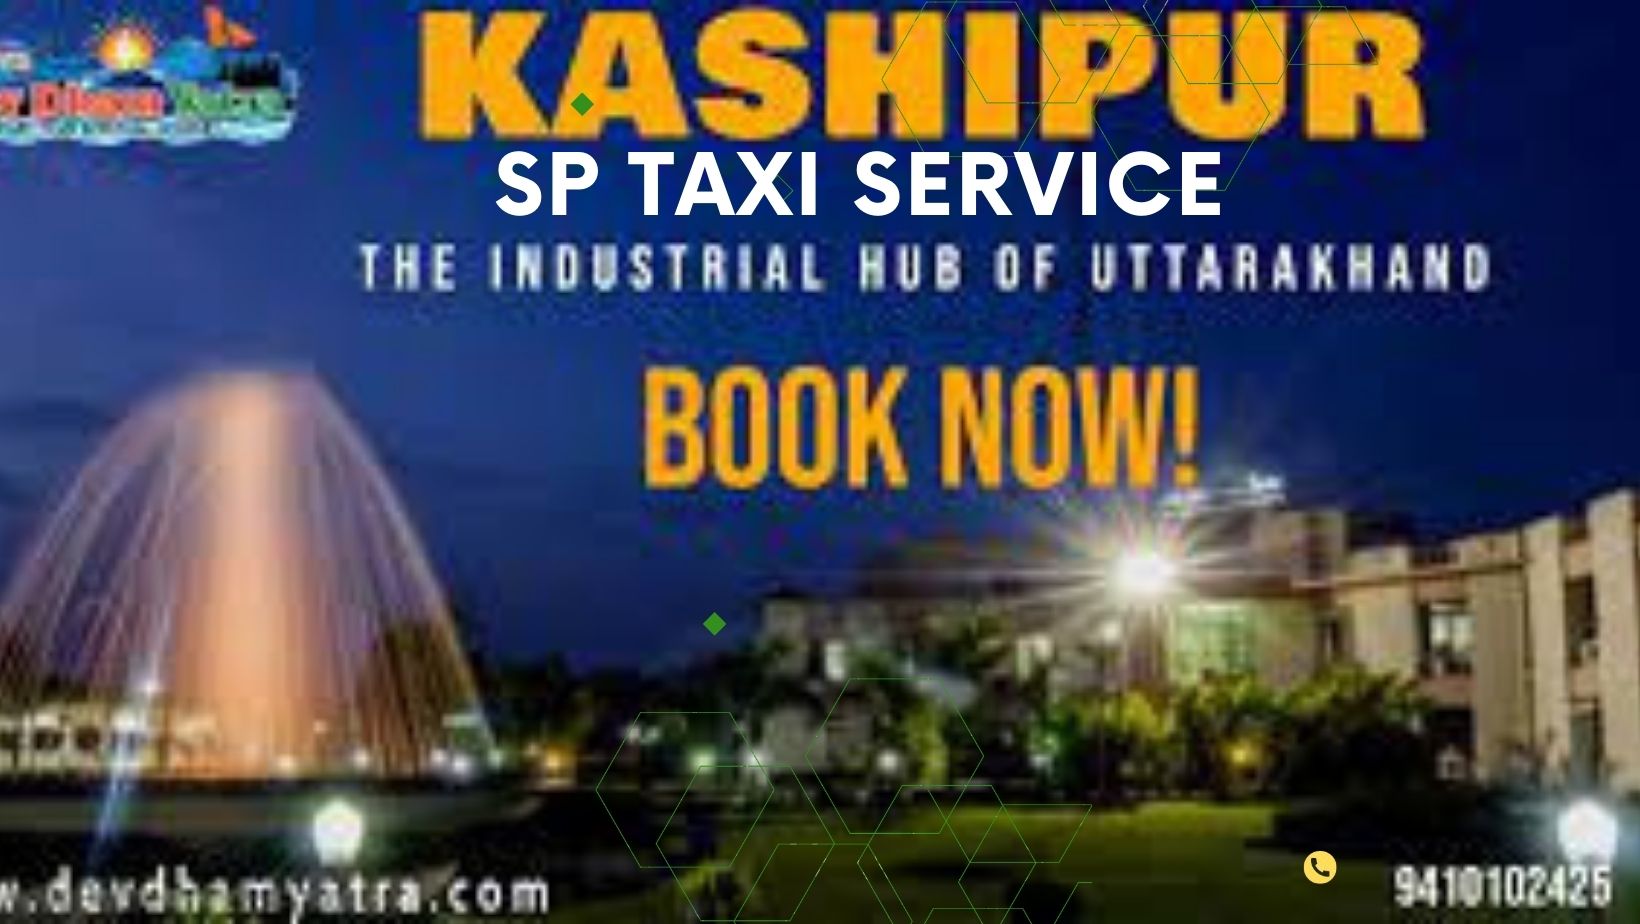 Kashipur Taxi service